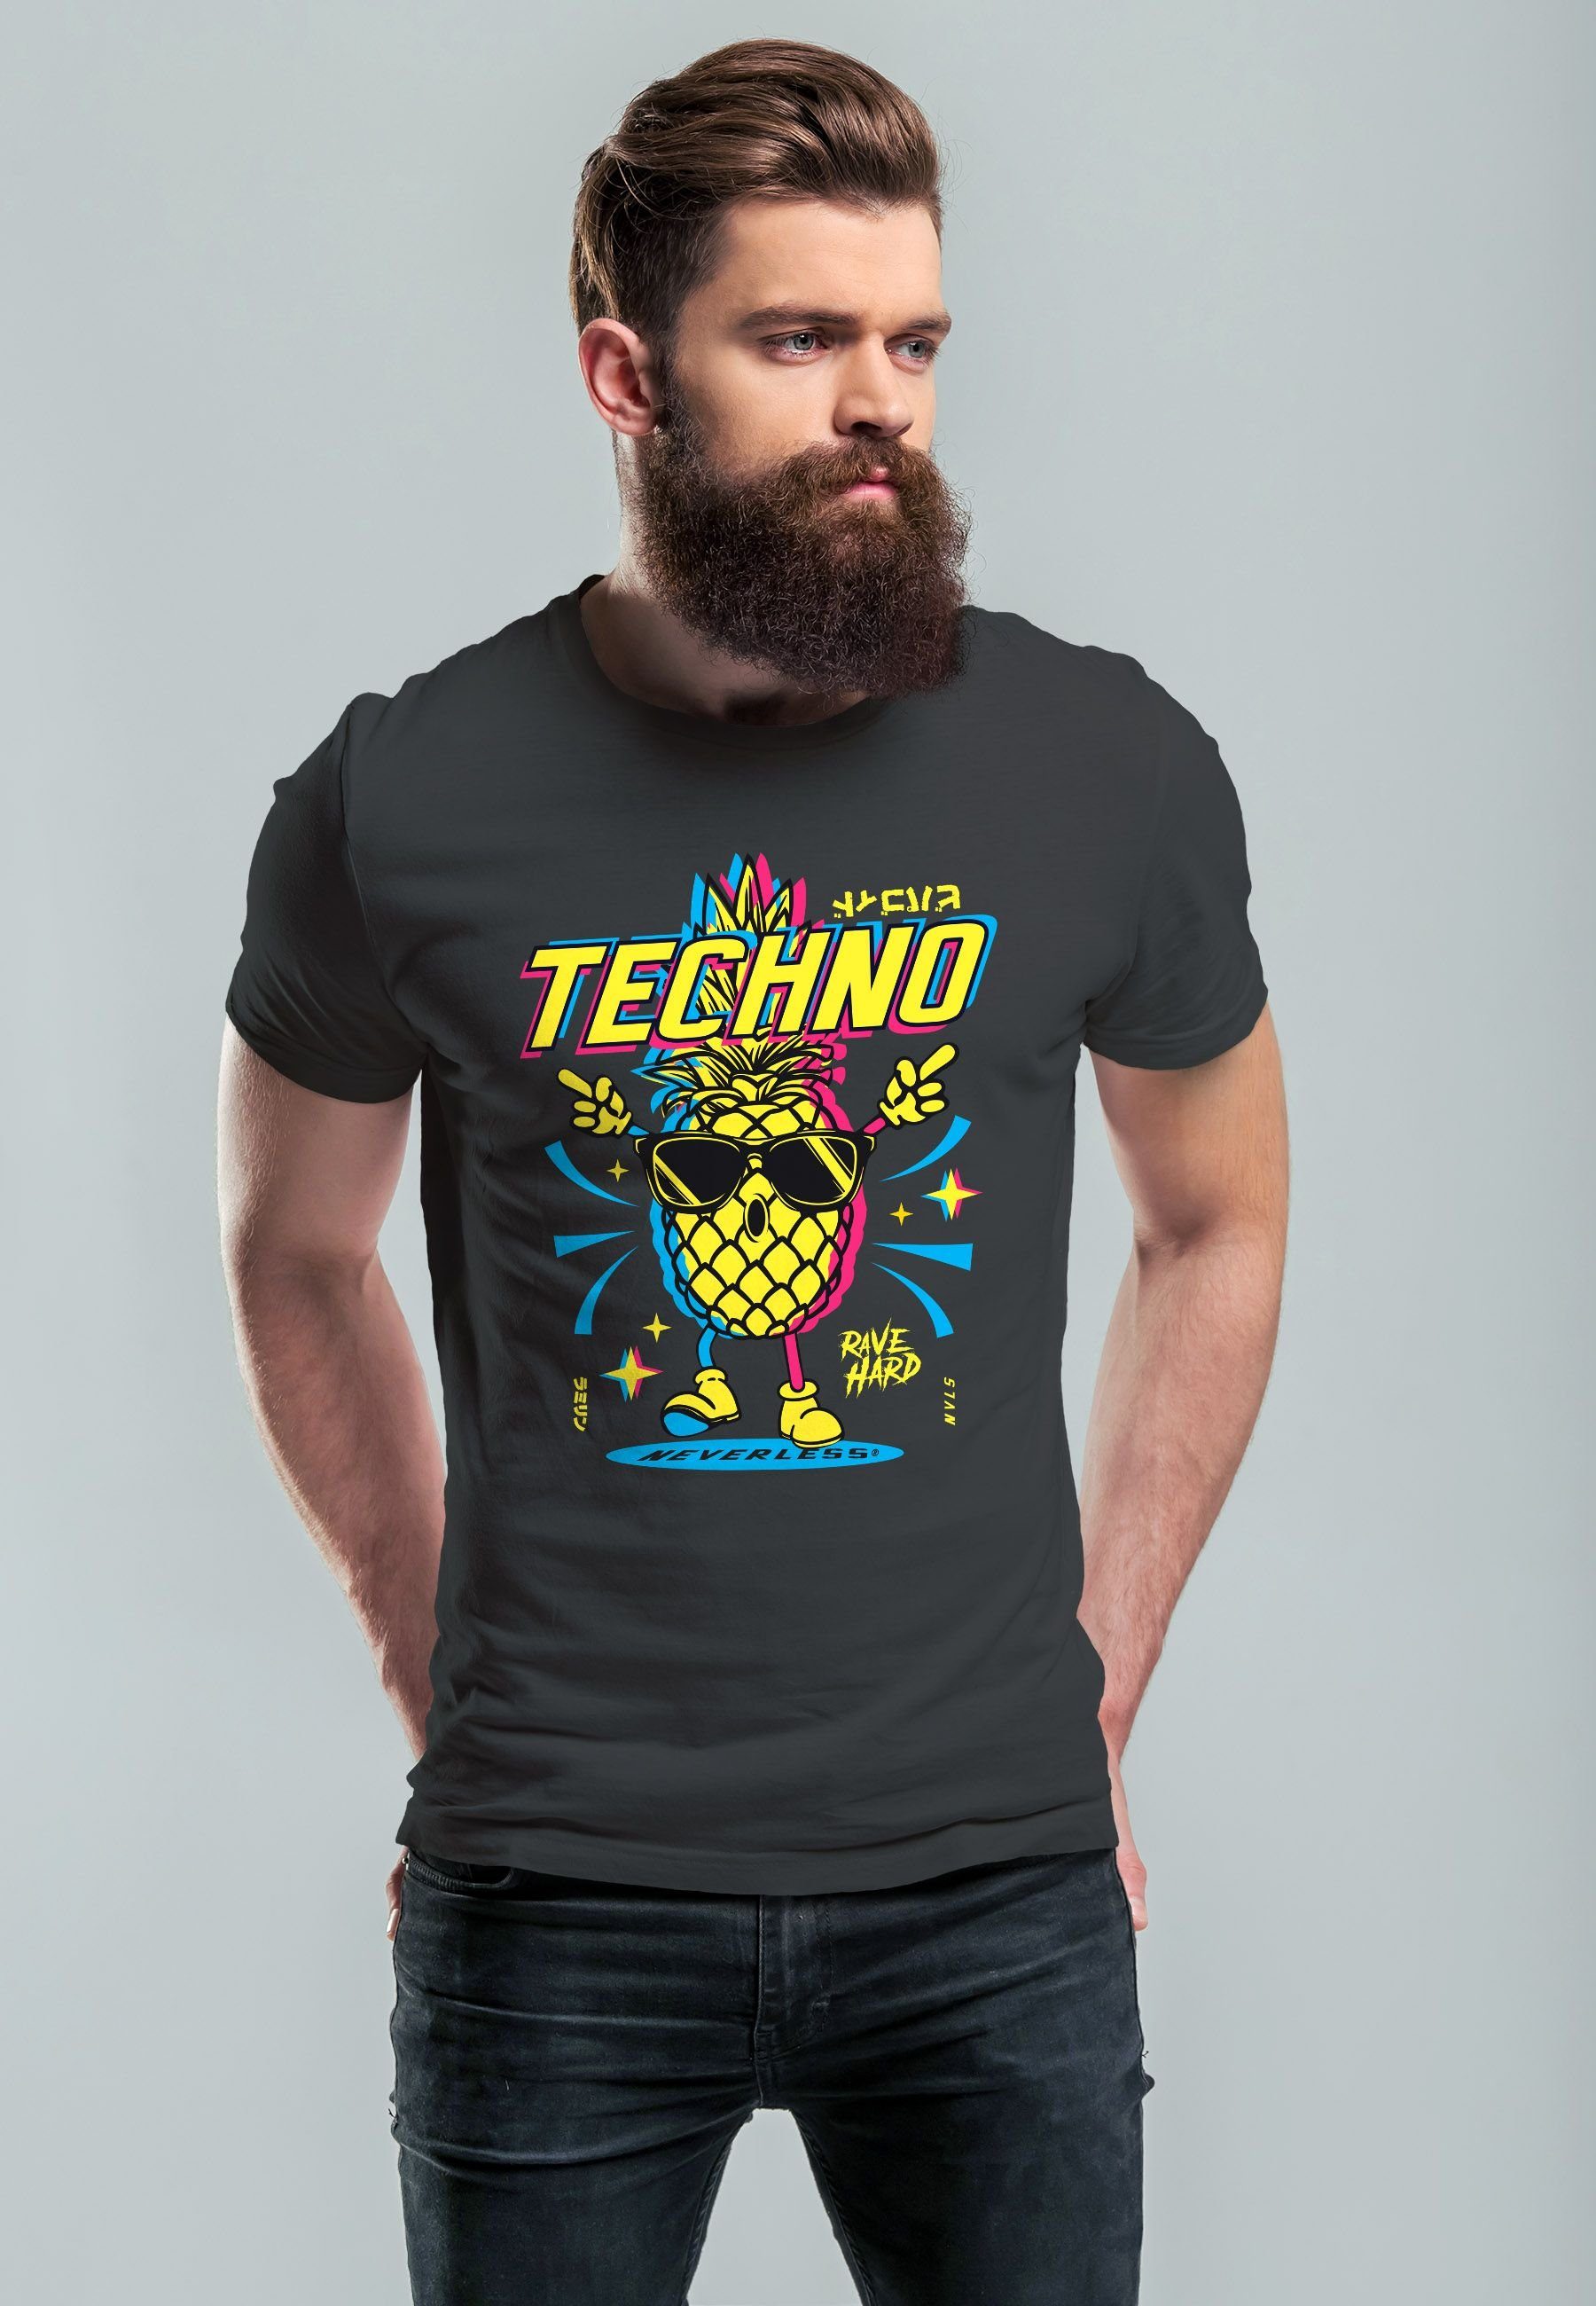 mit Printshirt Shirt anthrazit Techno Print-Shirt Ananas Lustig Print Tanzen Rave Herren Party T-Shirt Neverless